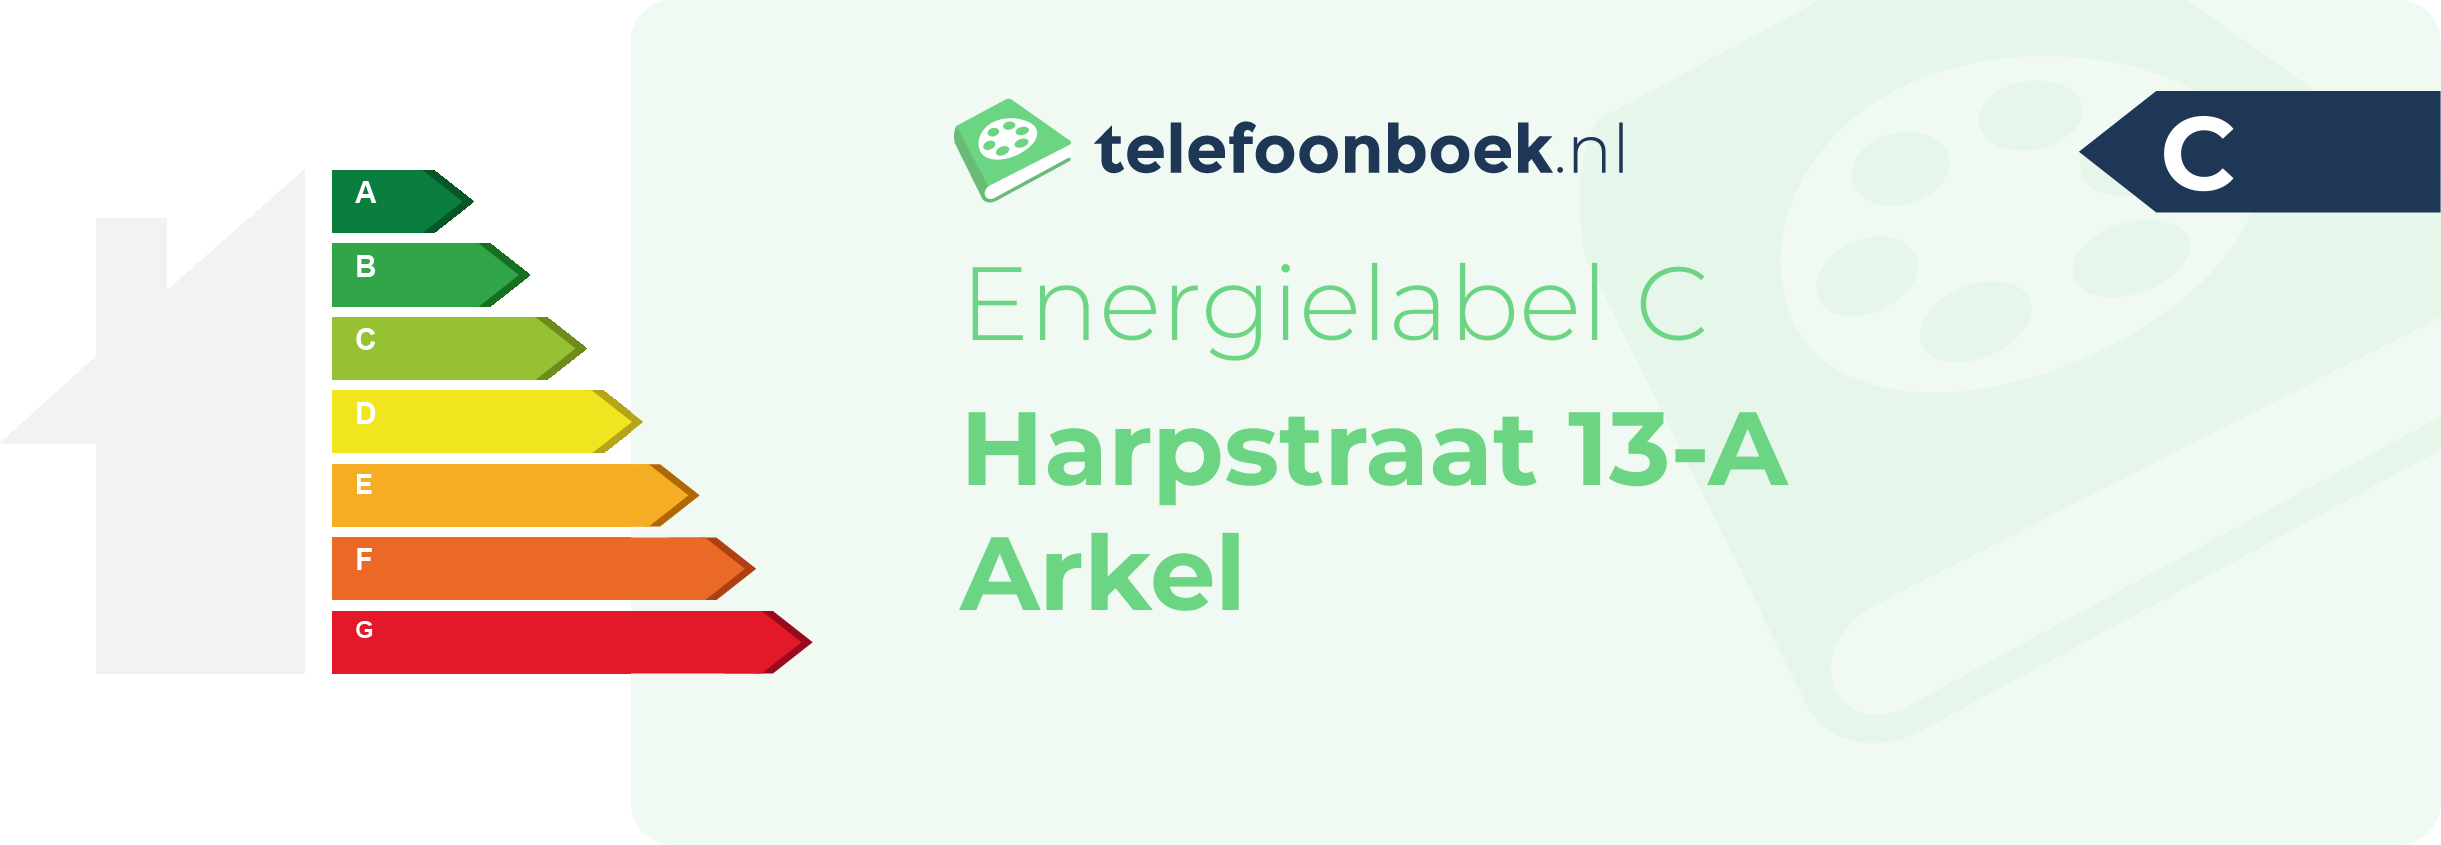 Energielabel Harpstraat 13-A Arkel